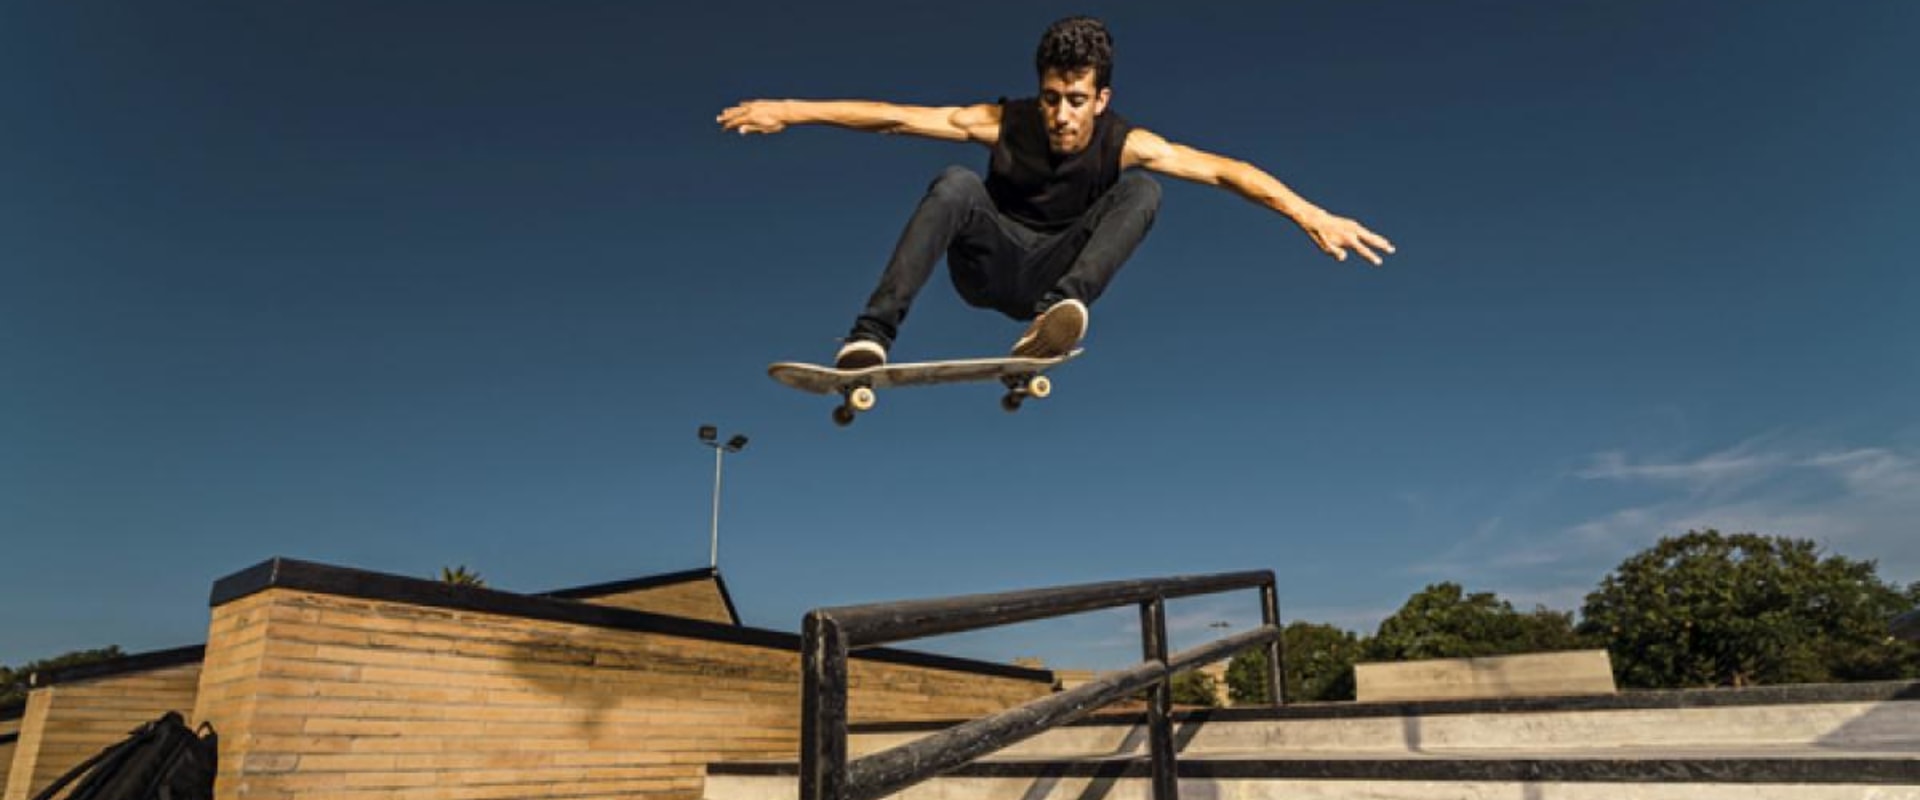 Late Flip: A Comprehensive Explanation of an Advanced Skateboarding Trick